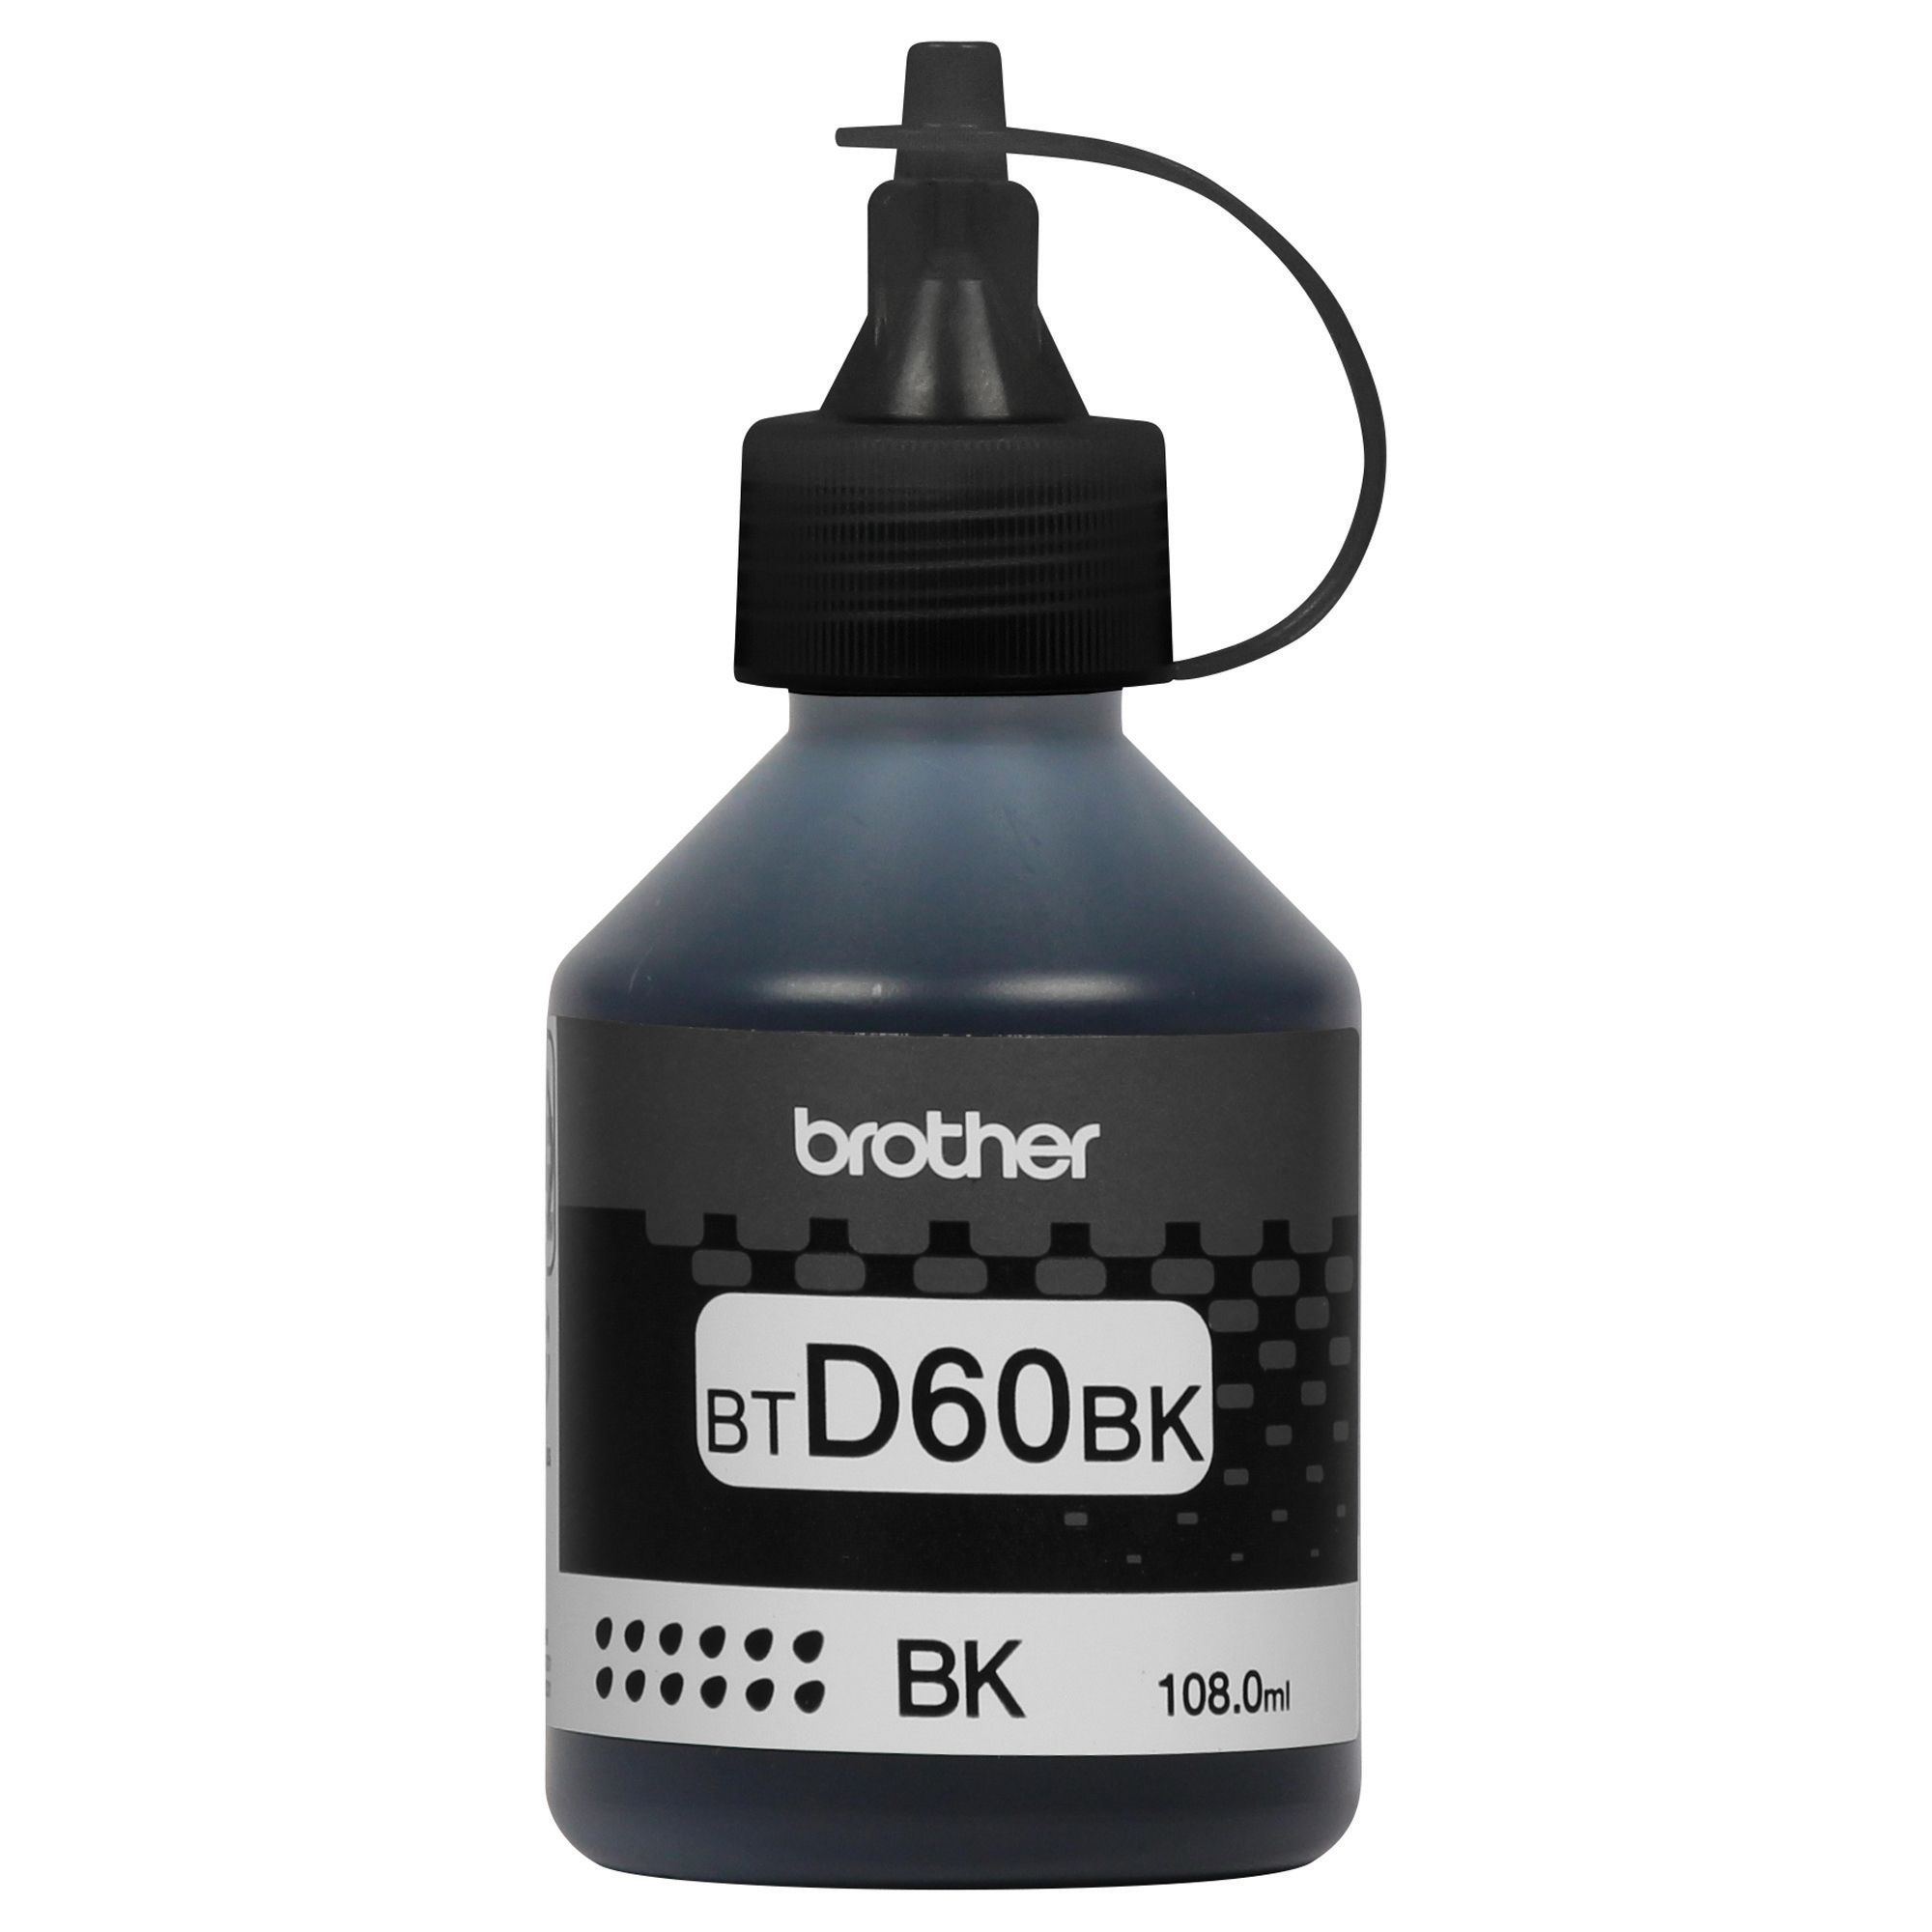 BTD60BK - Botella de tinta negra de ultra alto rendimiento